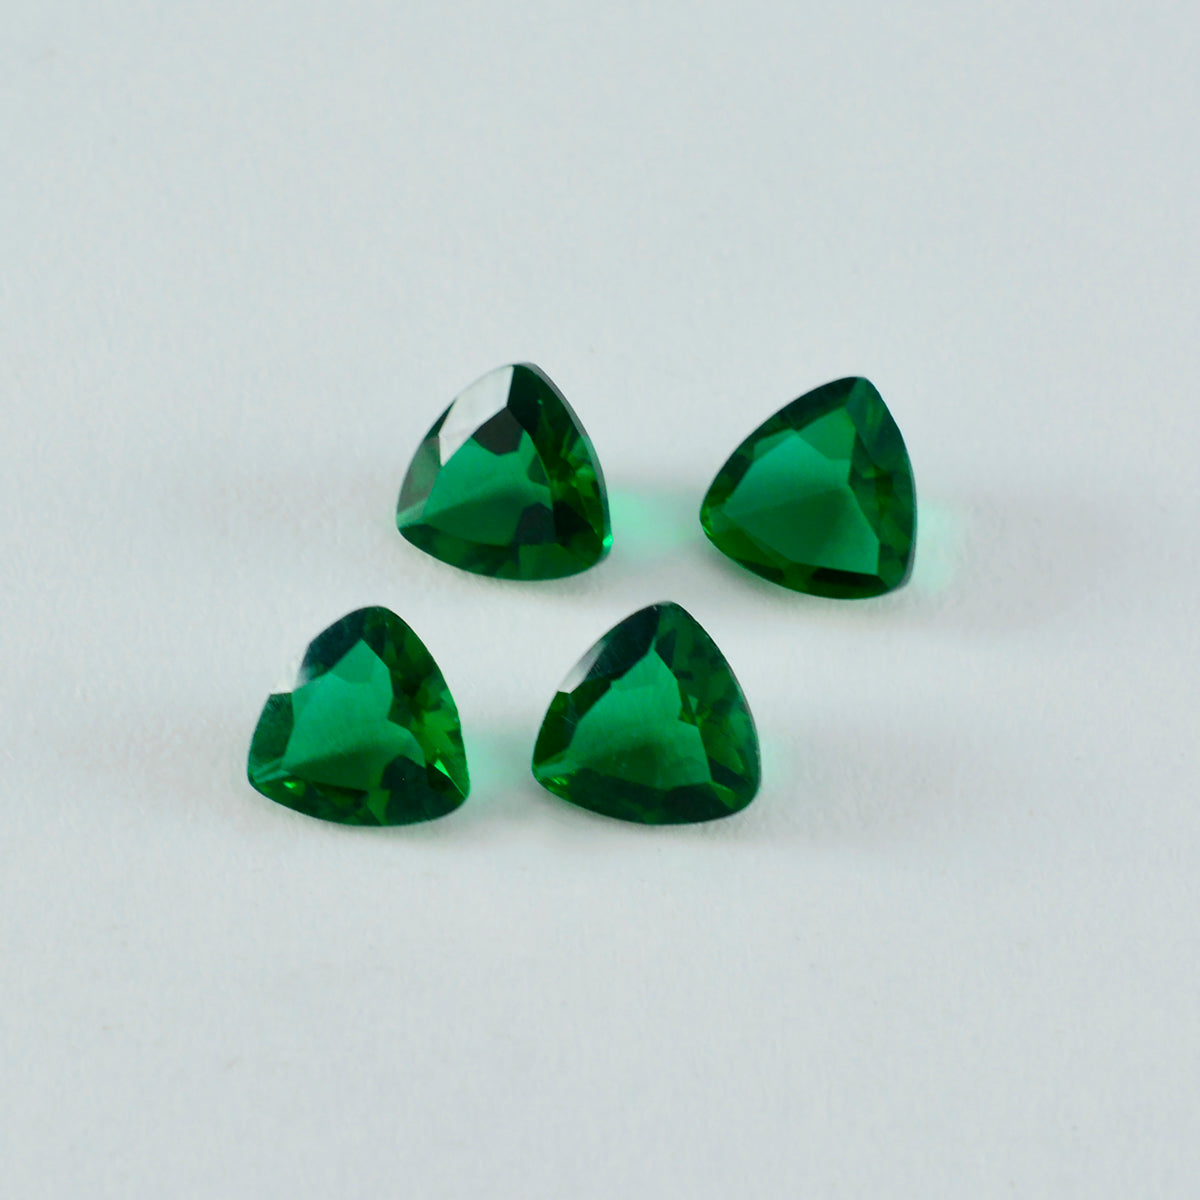 Riyogems 1PC Green Emerald CZ Faceted 12x12 mm Trillion Shape AAA Quality Gems